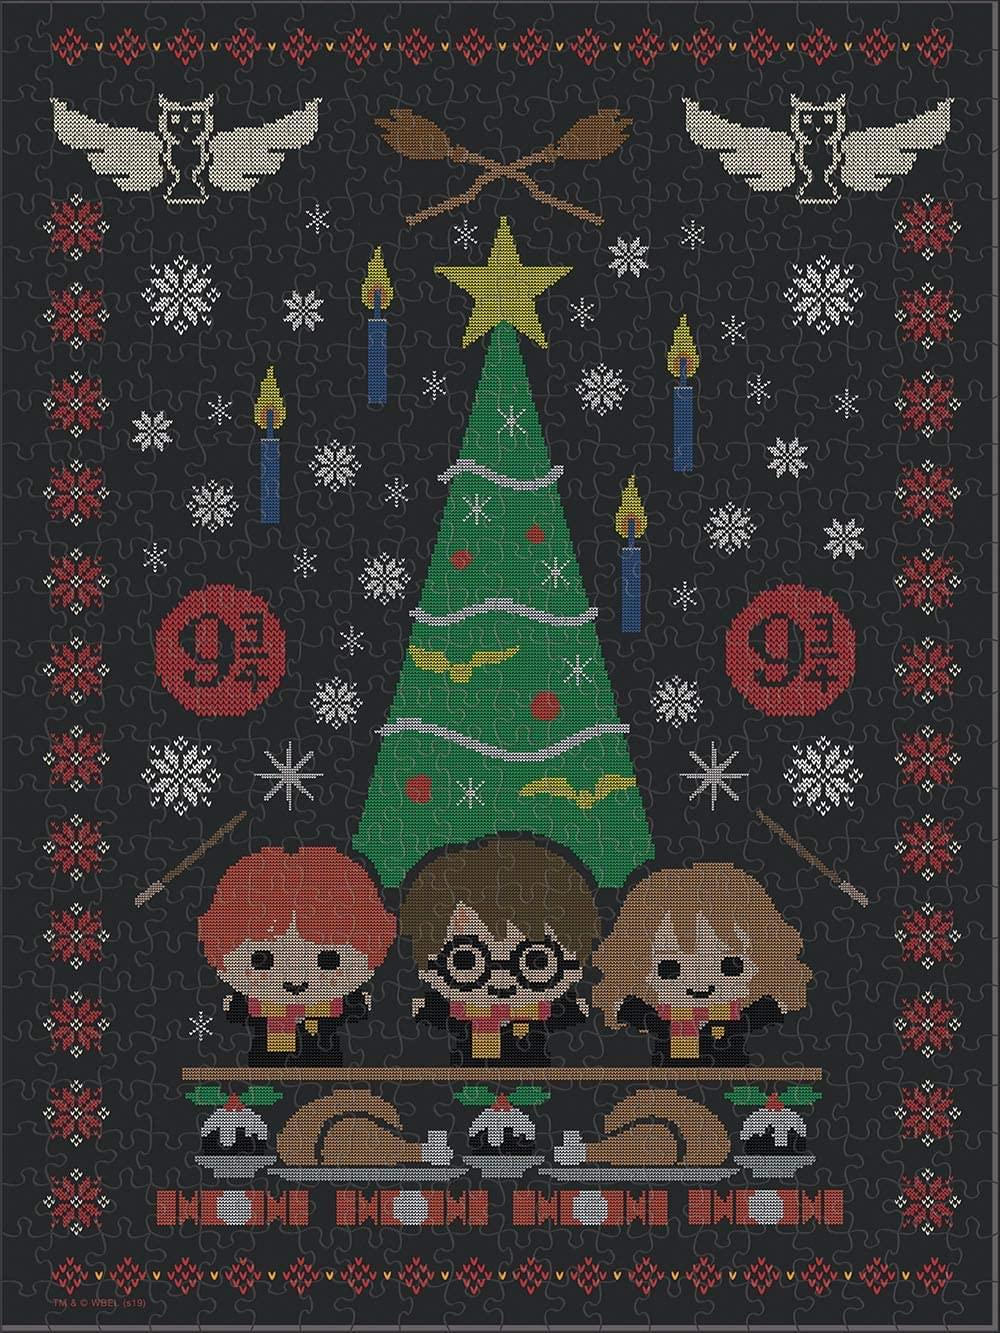 Harry Potter Weasley Sweaters 550 Piece Jigsaw Puzzle